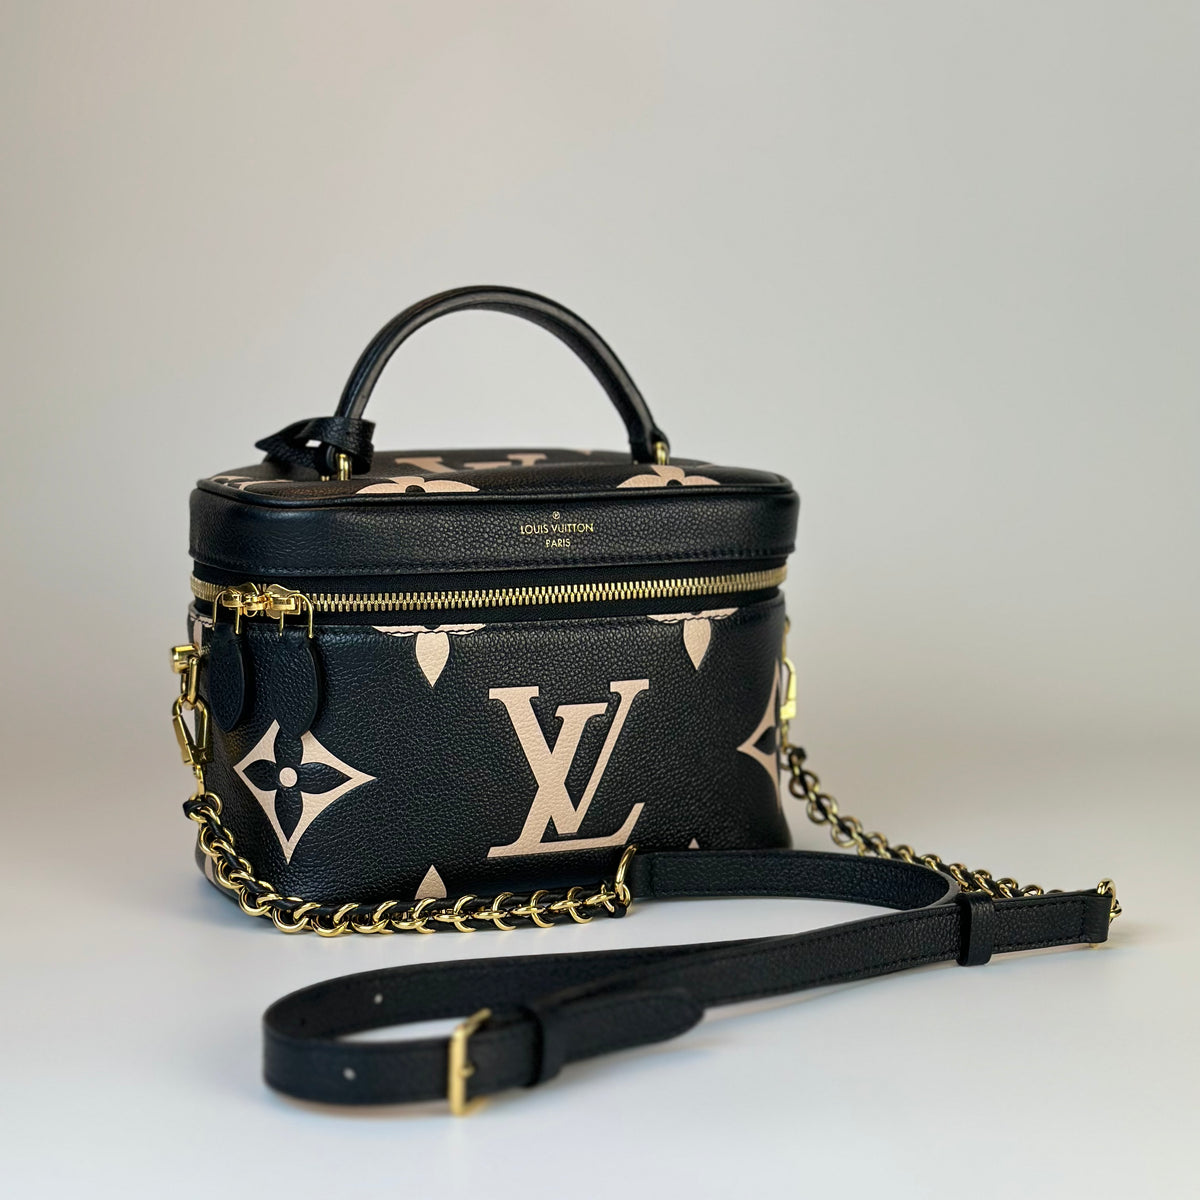 Túi xách nữ Louis Vuitton Vanity PM In Monogram Empreinte Leather